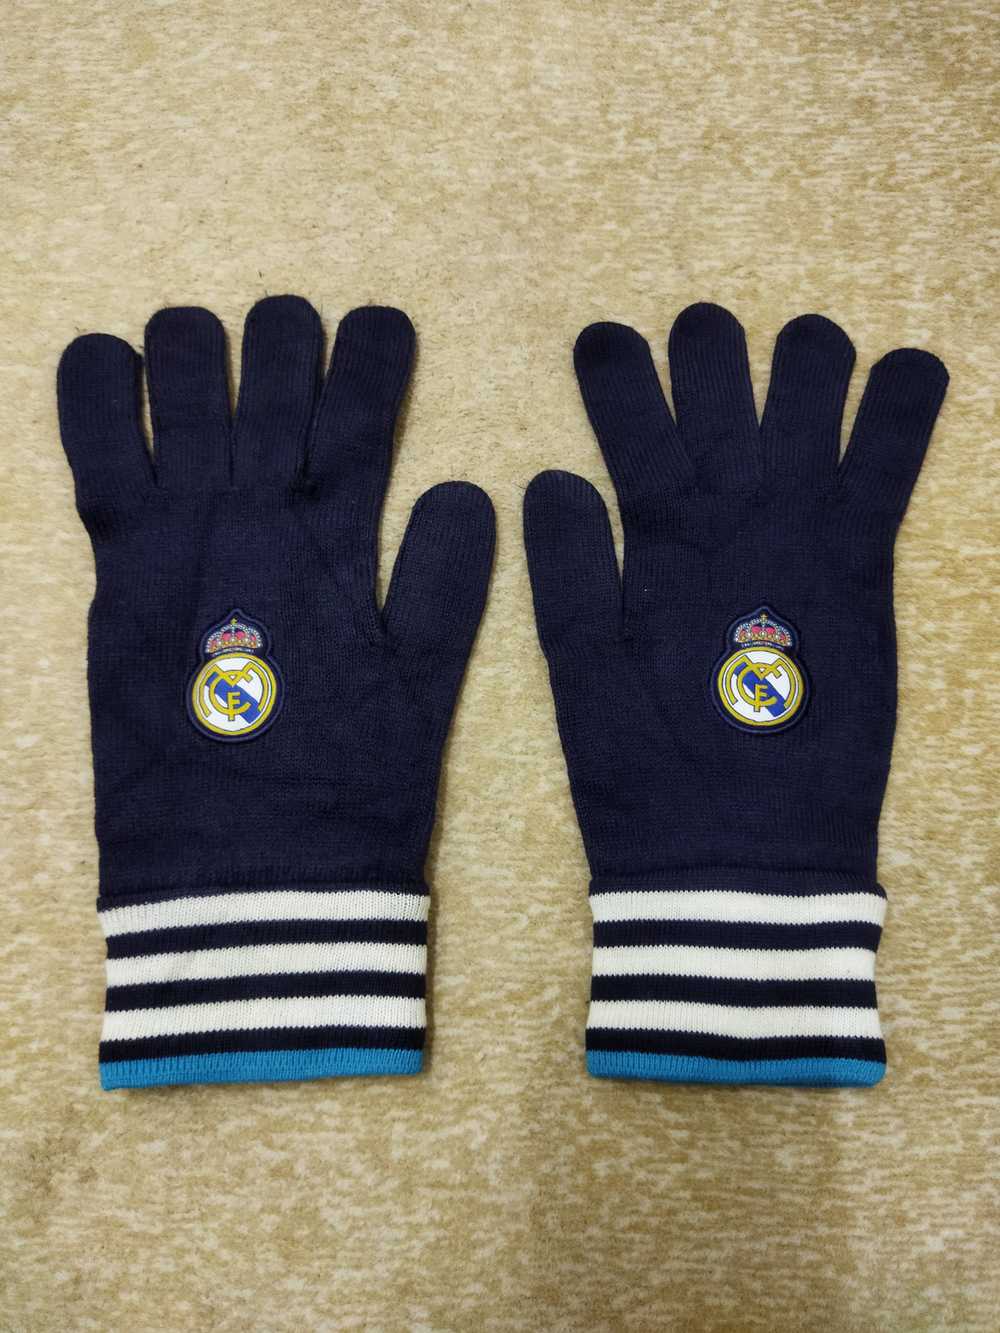 Real Madrid Real Madrid Gloves - image 2